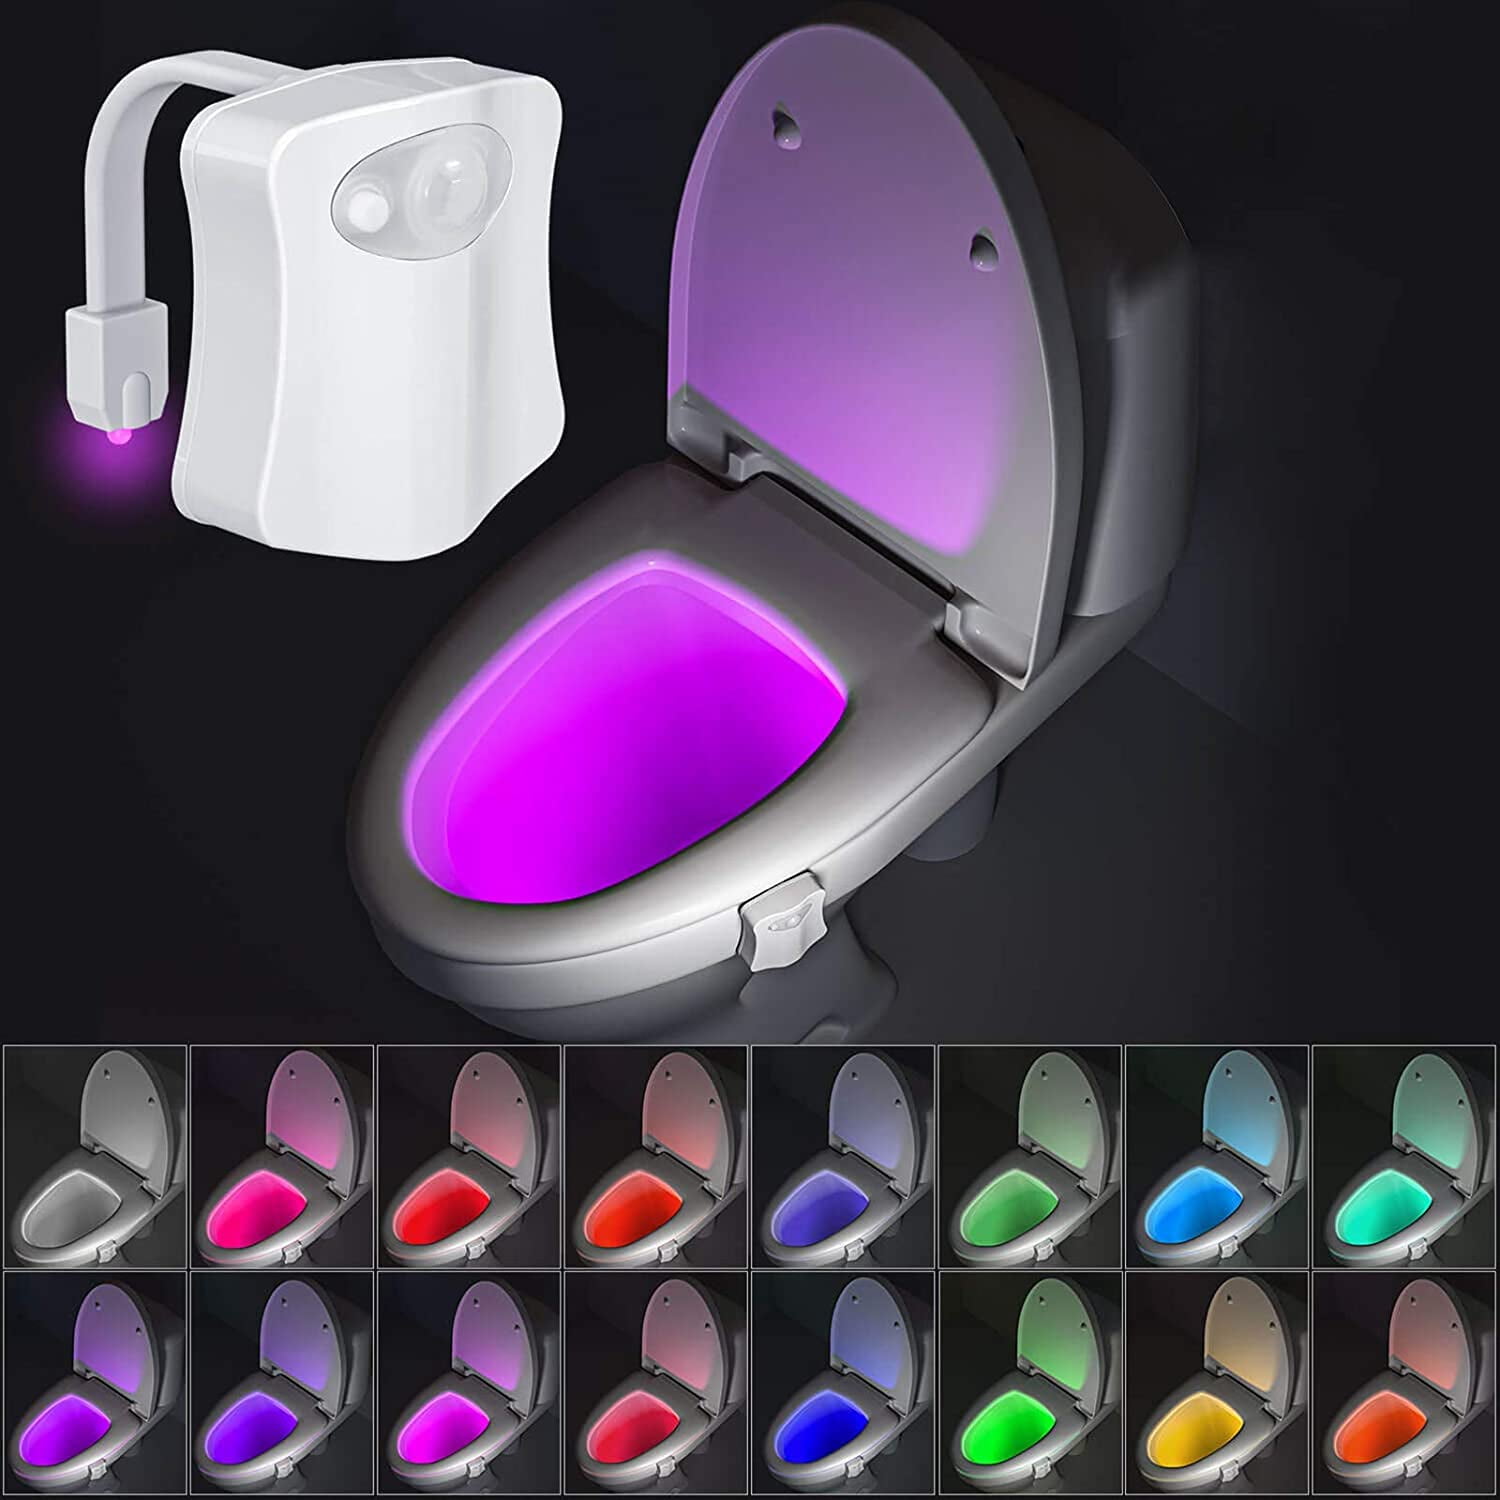 Tomshine LED Toilet Night Light 16 Color Changin/Single Color Fixed Motion/ Light Sensor Flexible Bowl Light for Home Bathroom Hotel Longer Standby Time